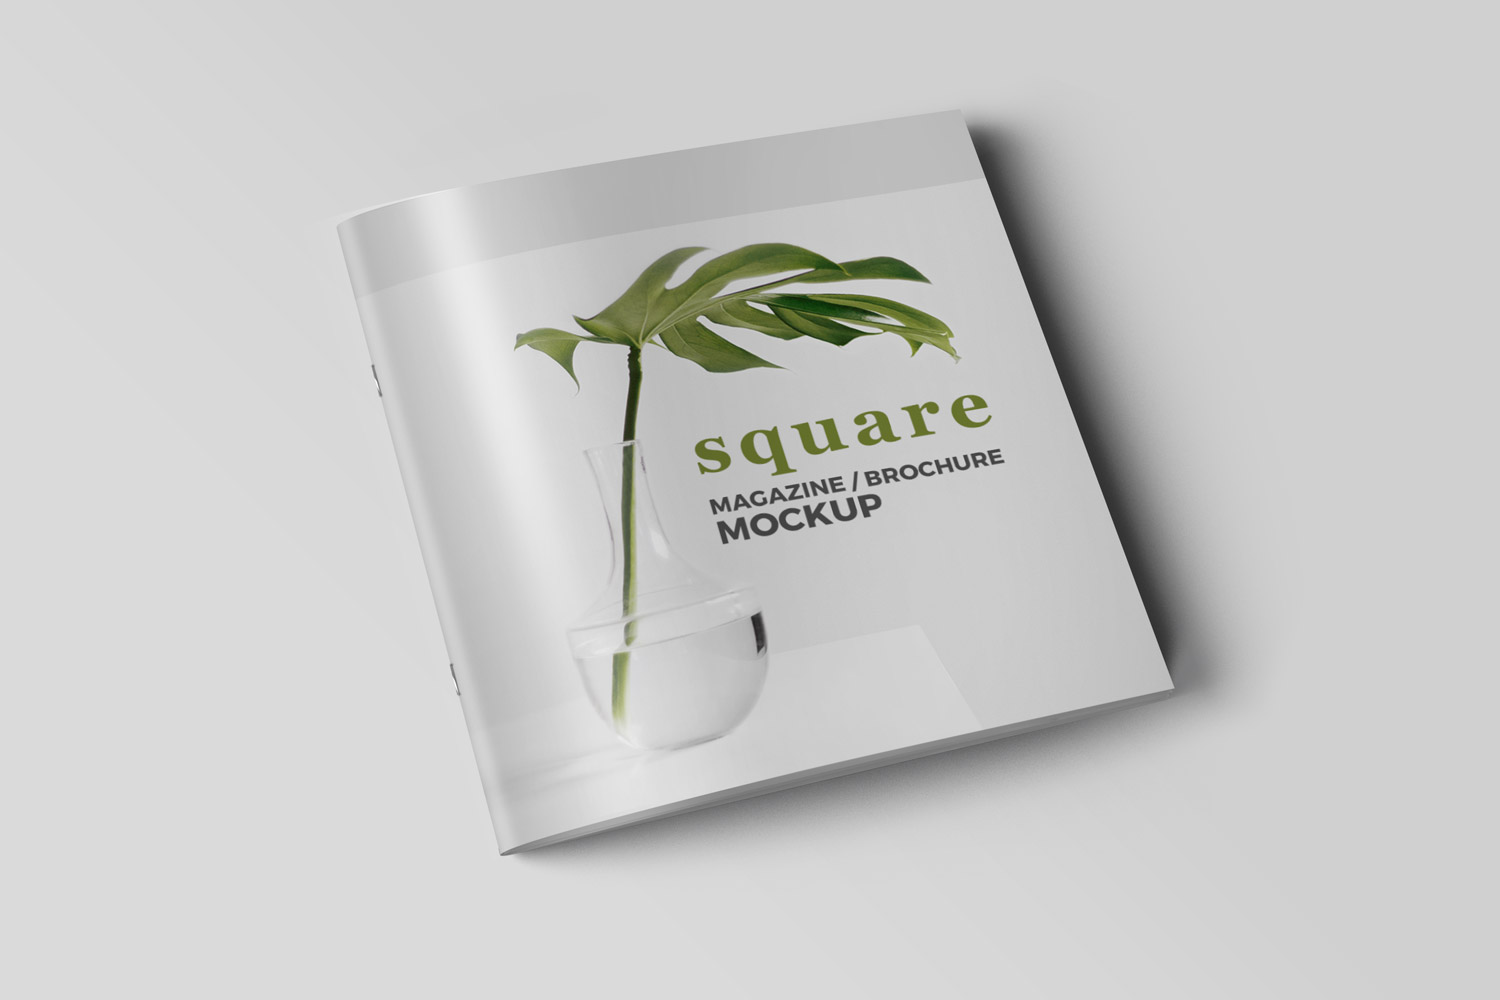 Square Magazine Brochure Mockup